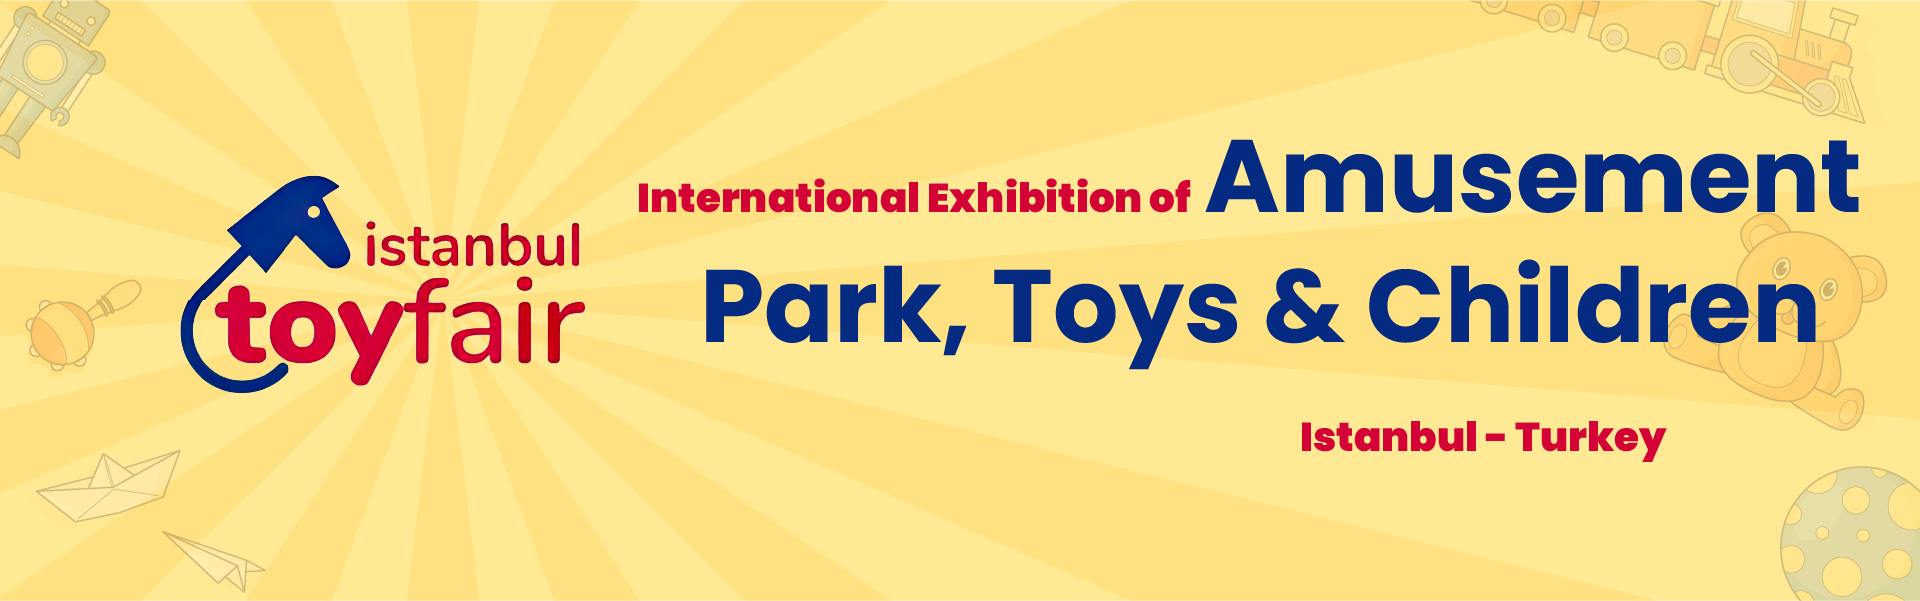 Toy Fair Exhibition Istanbul Turkey